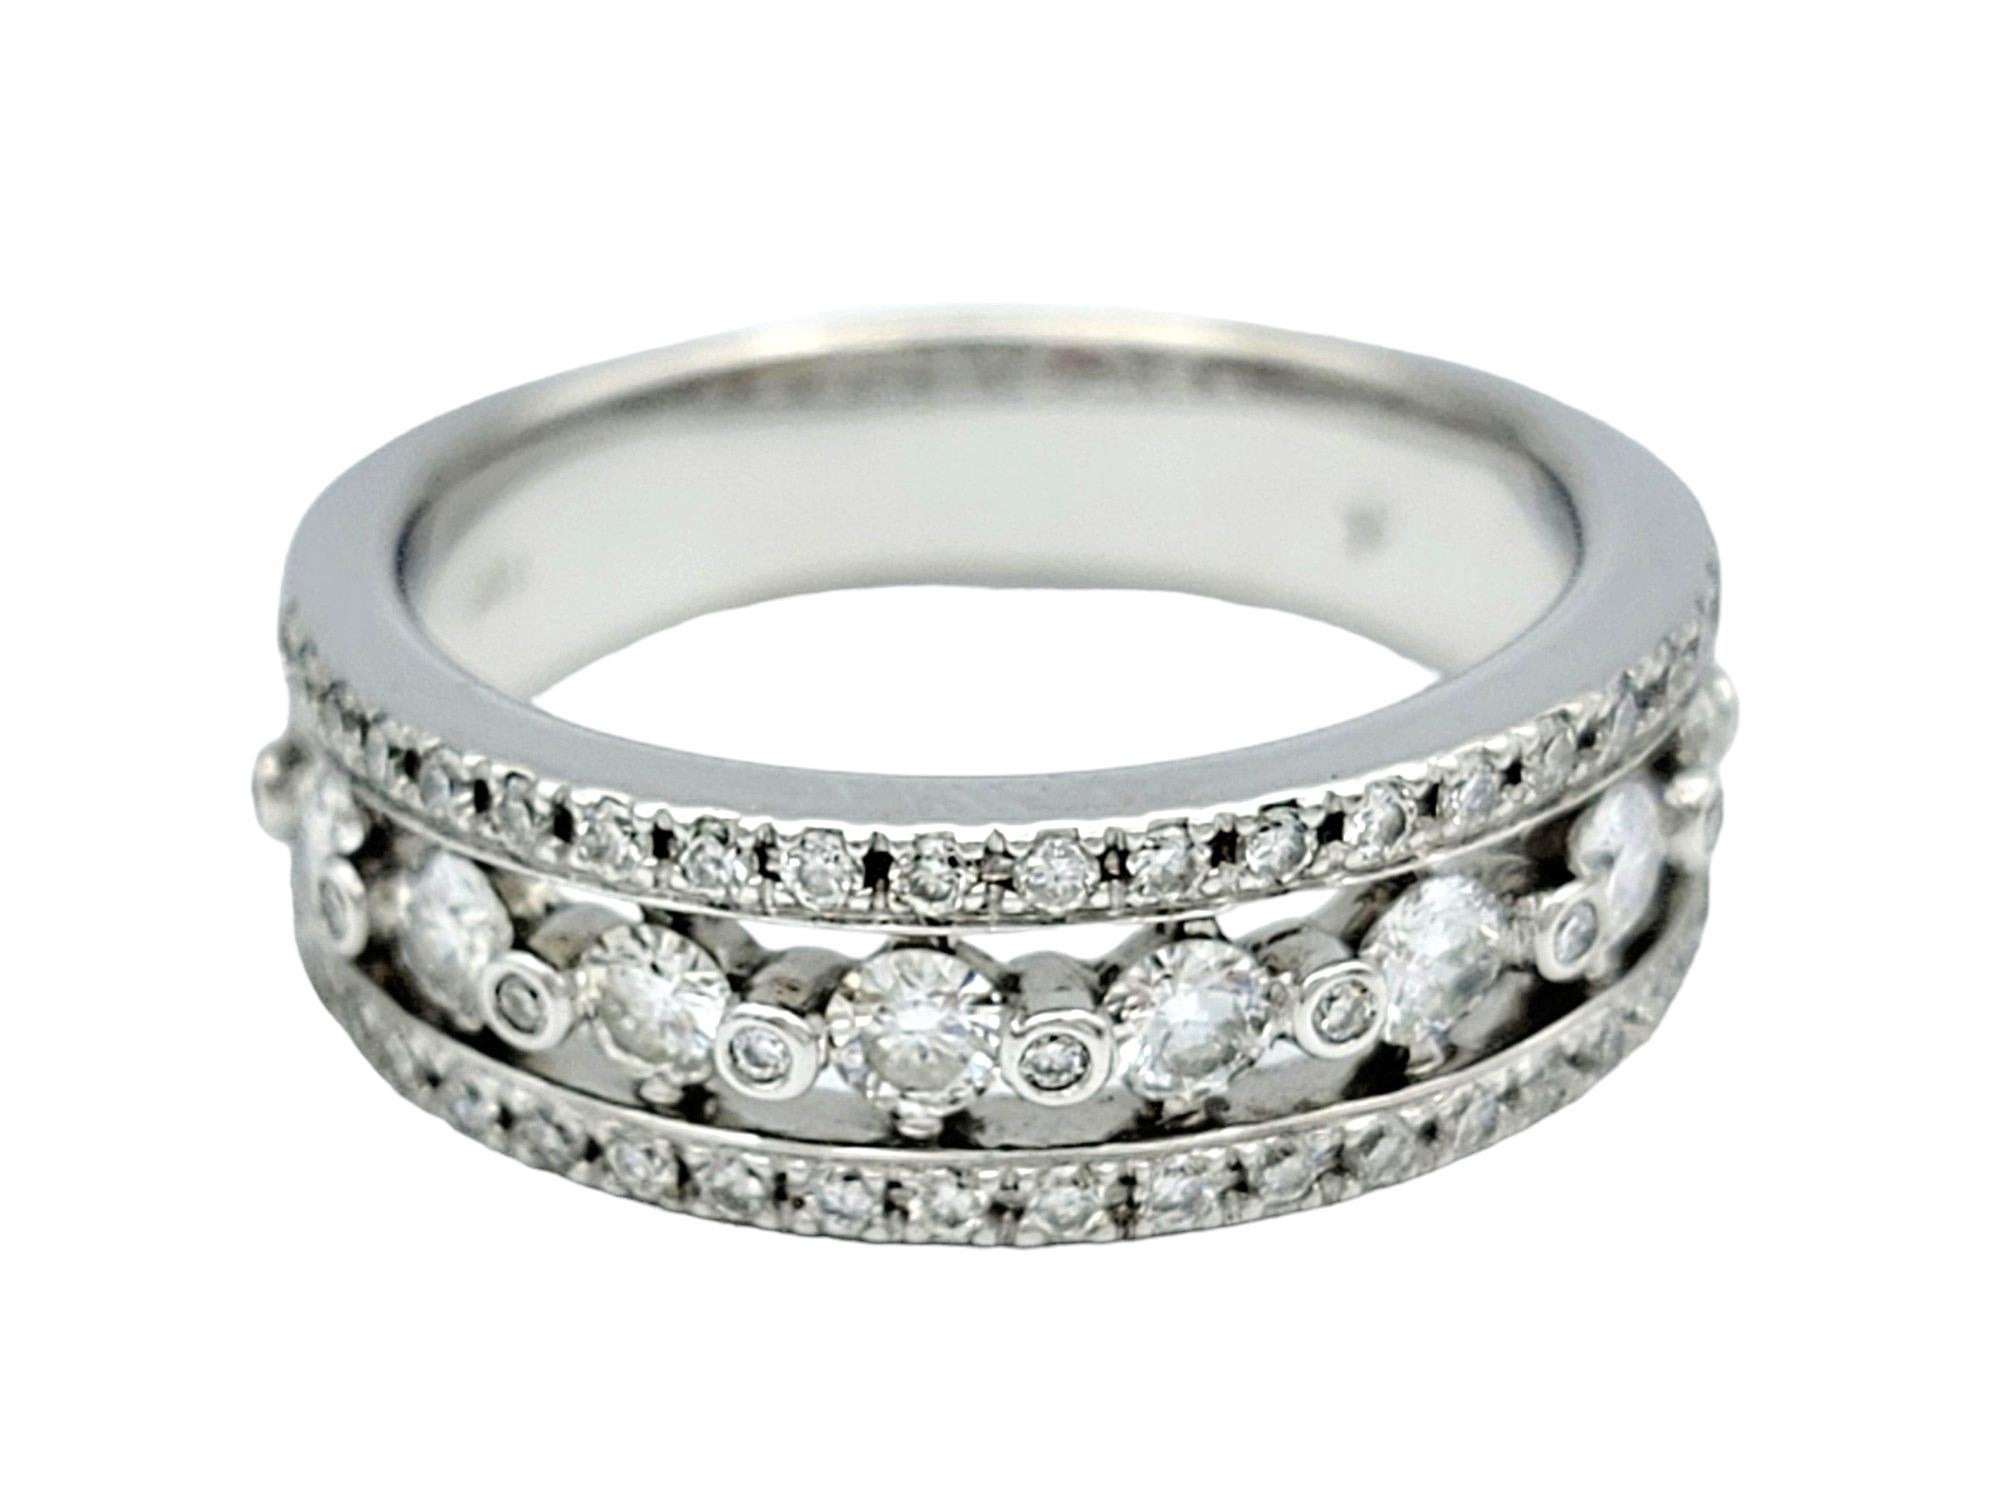 Multi-Row Round Diamond Band Ring Set in Polished 14 Karat White Gold For Sale 1